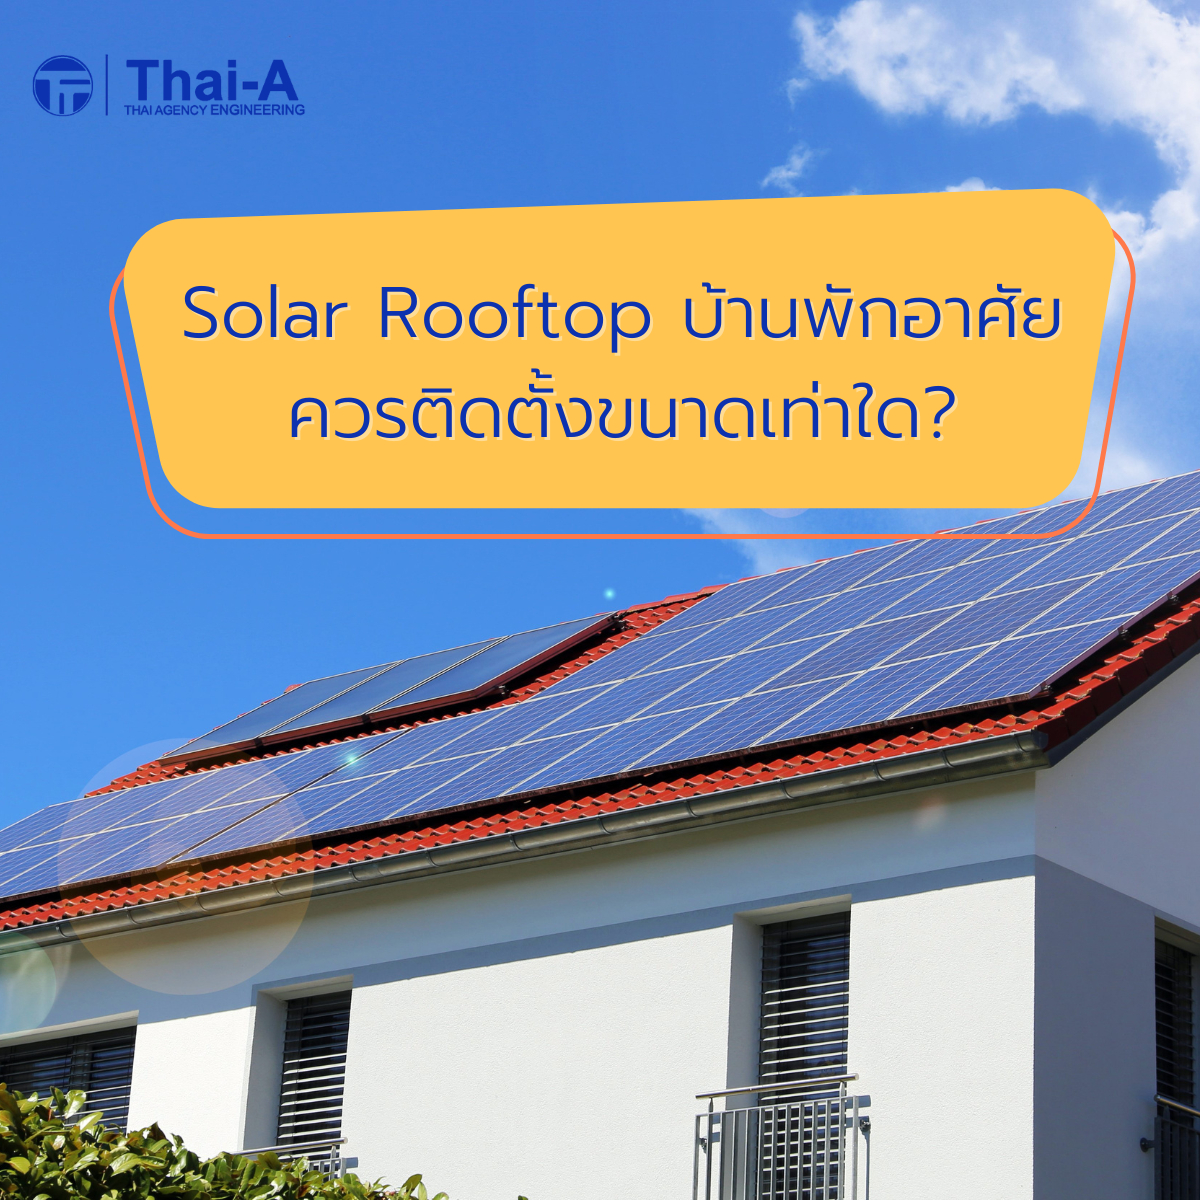 _Solar Rooftop บ้านพักอาศัยควรติดตั้งขนาดเท่าใด